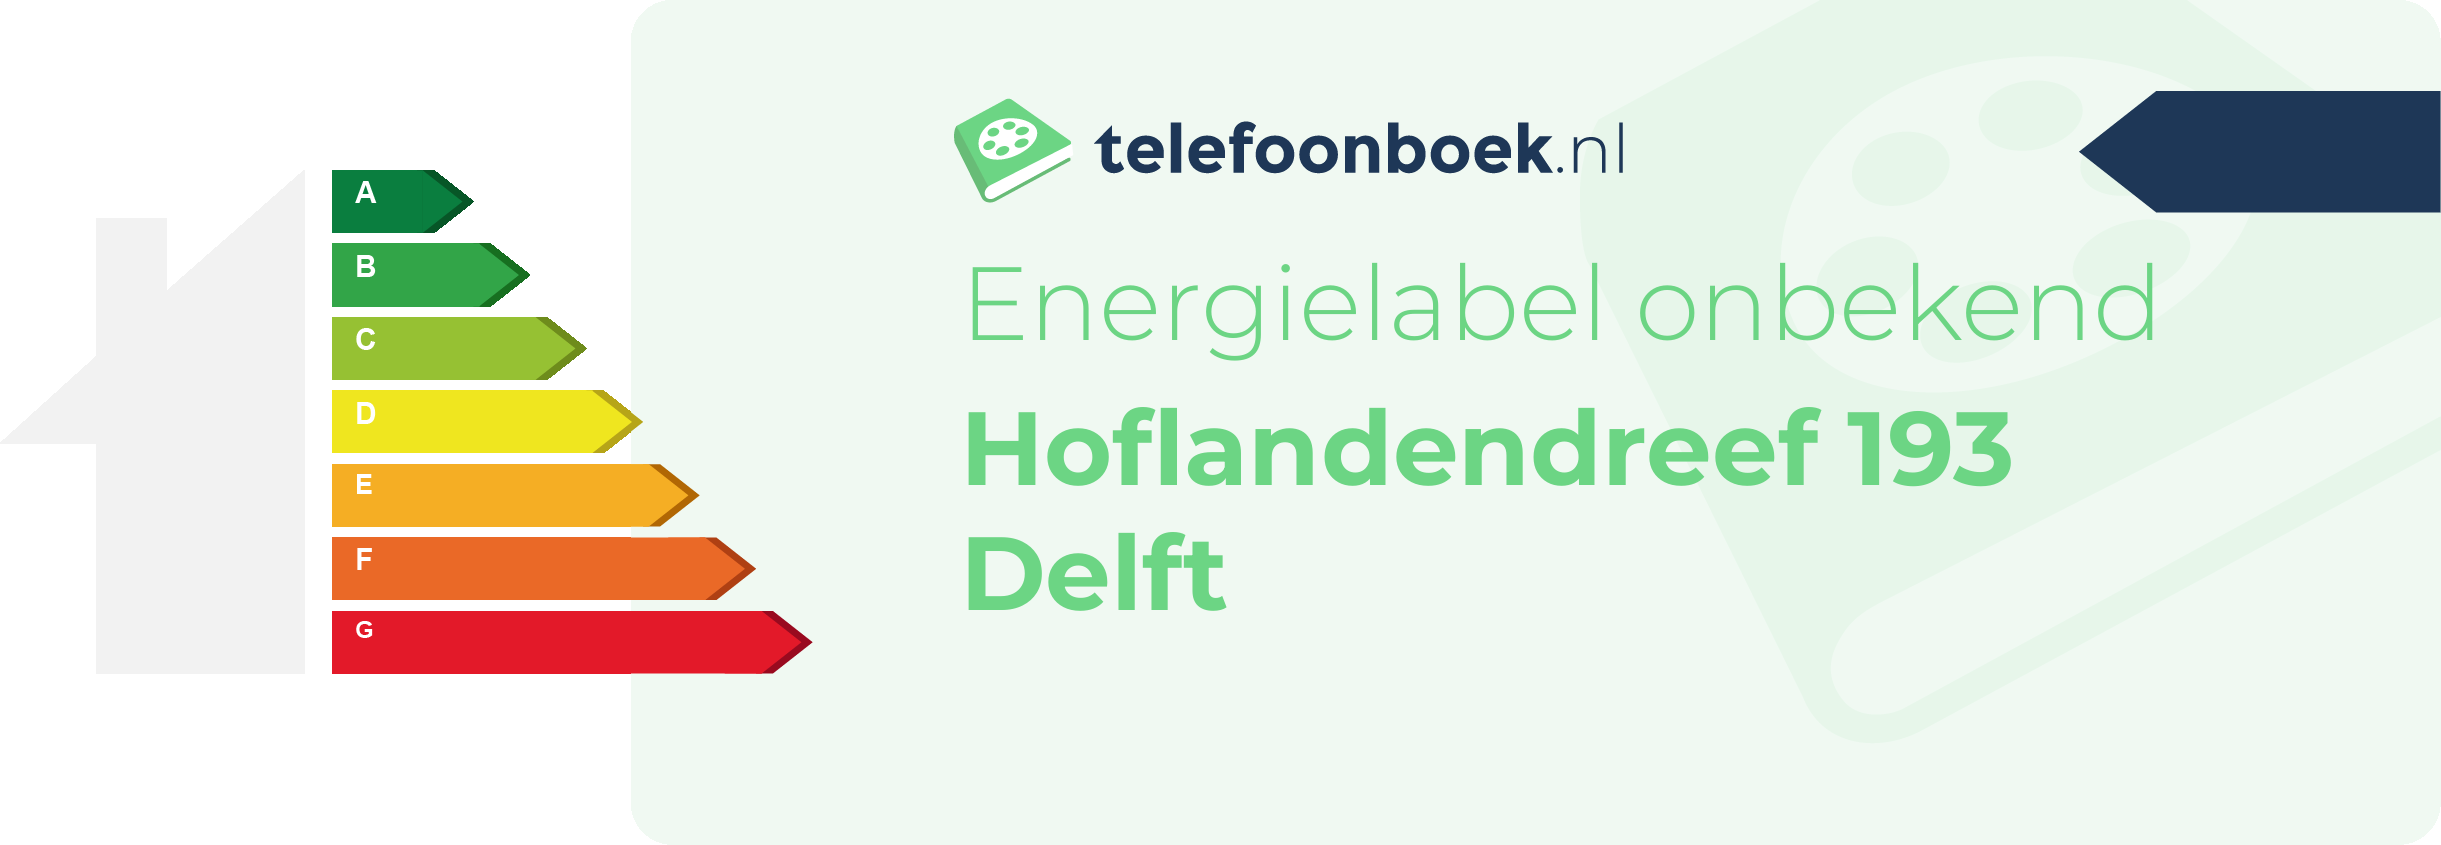 Energielabel Hoflandendreef 193 Delft